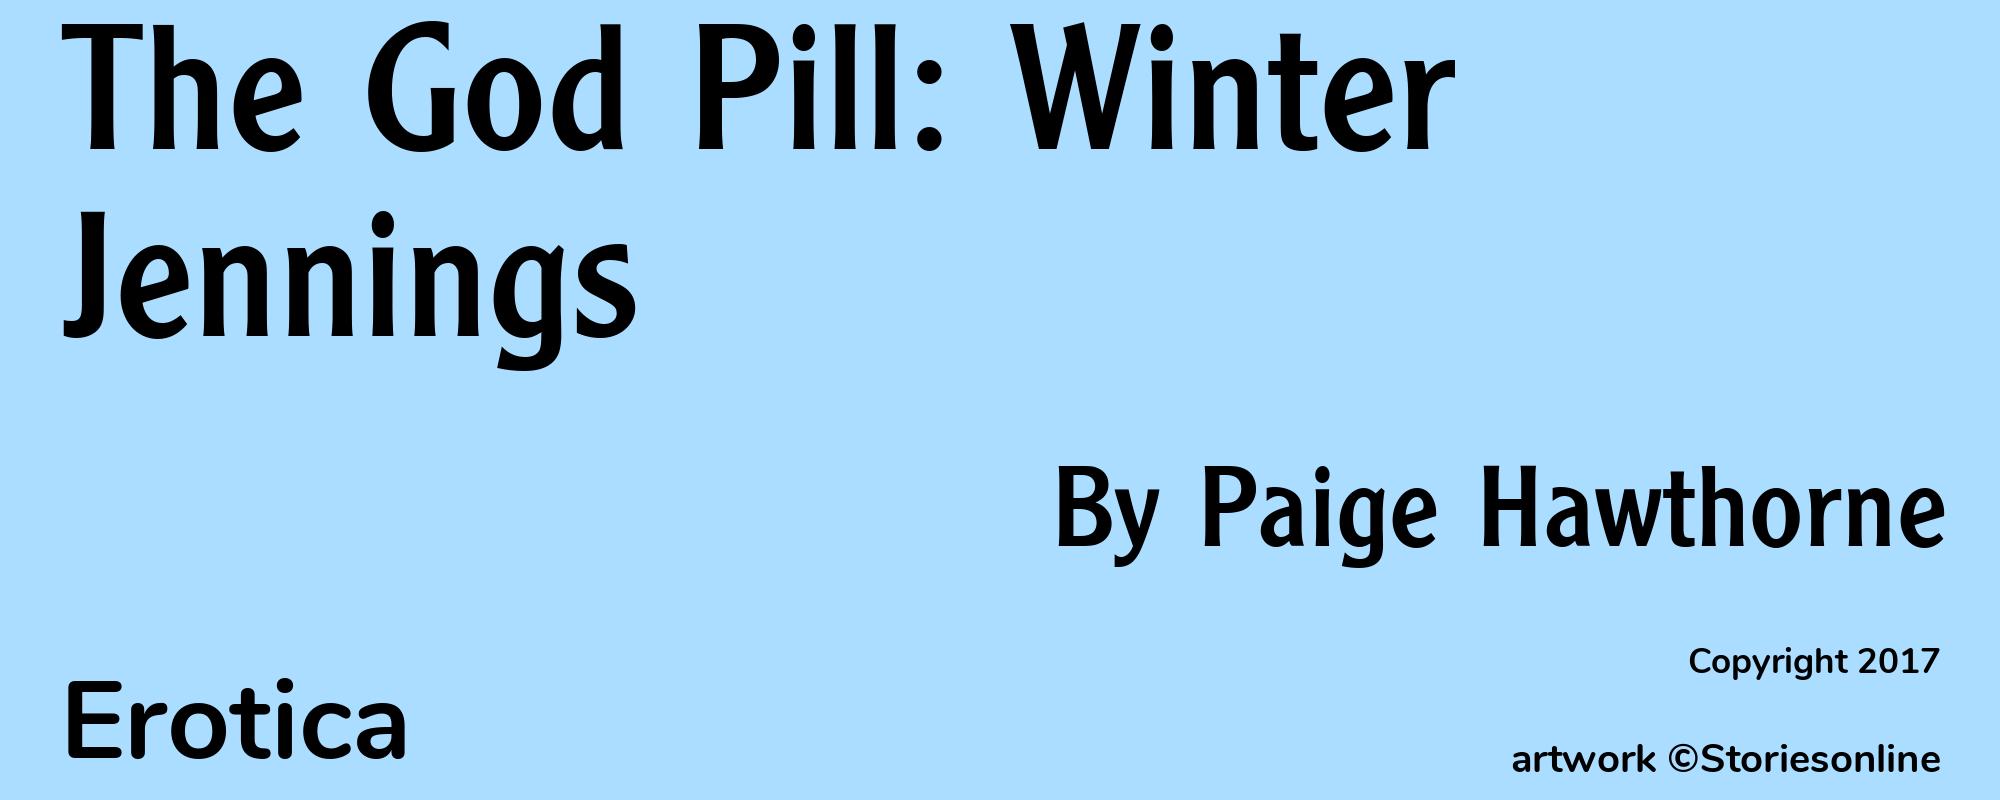 The God Pill: Winter Jennings - Cover